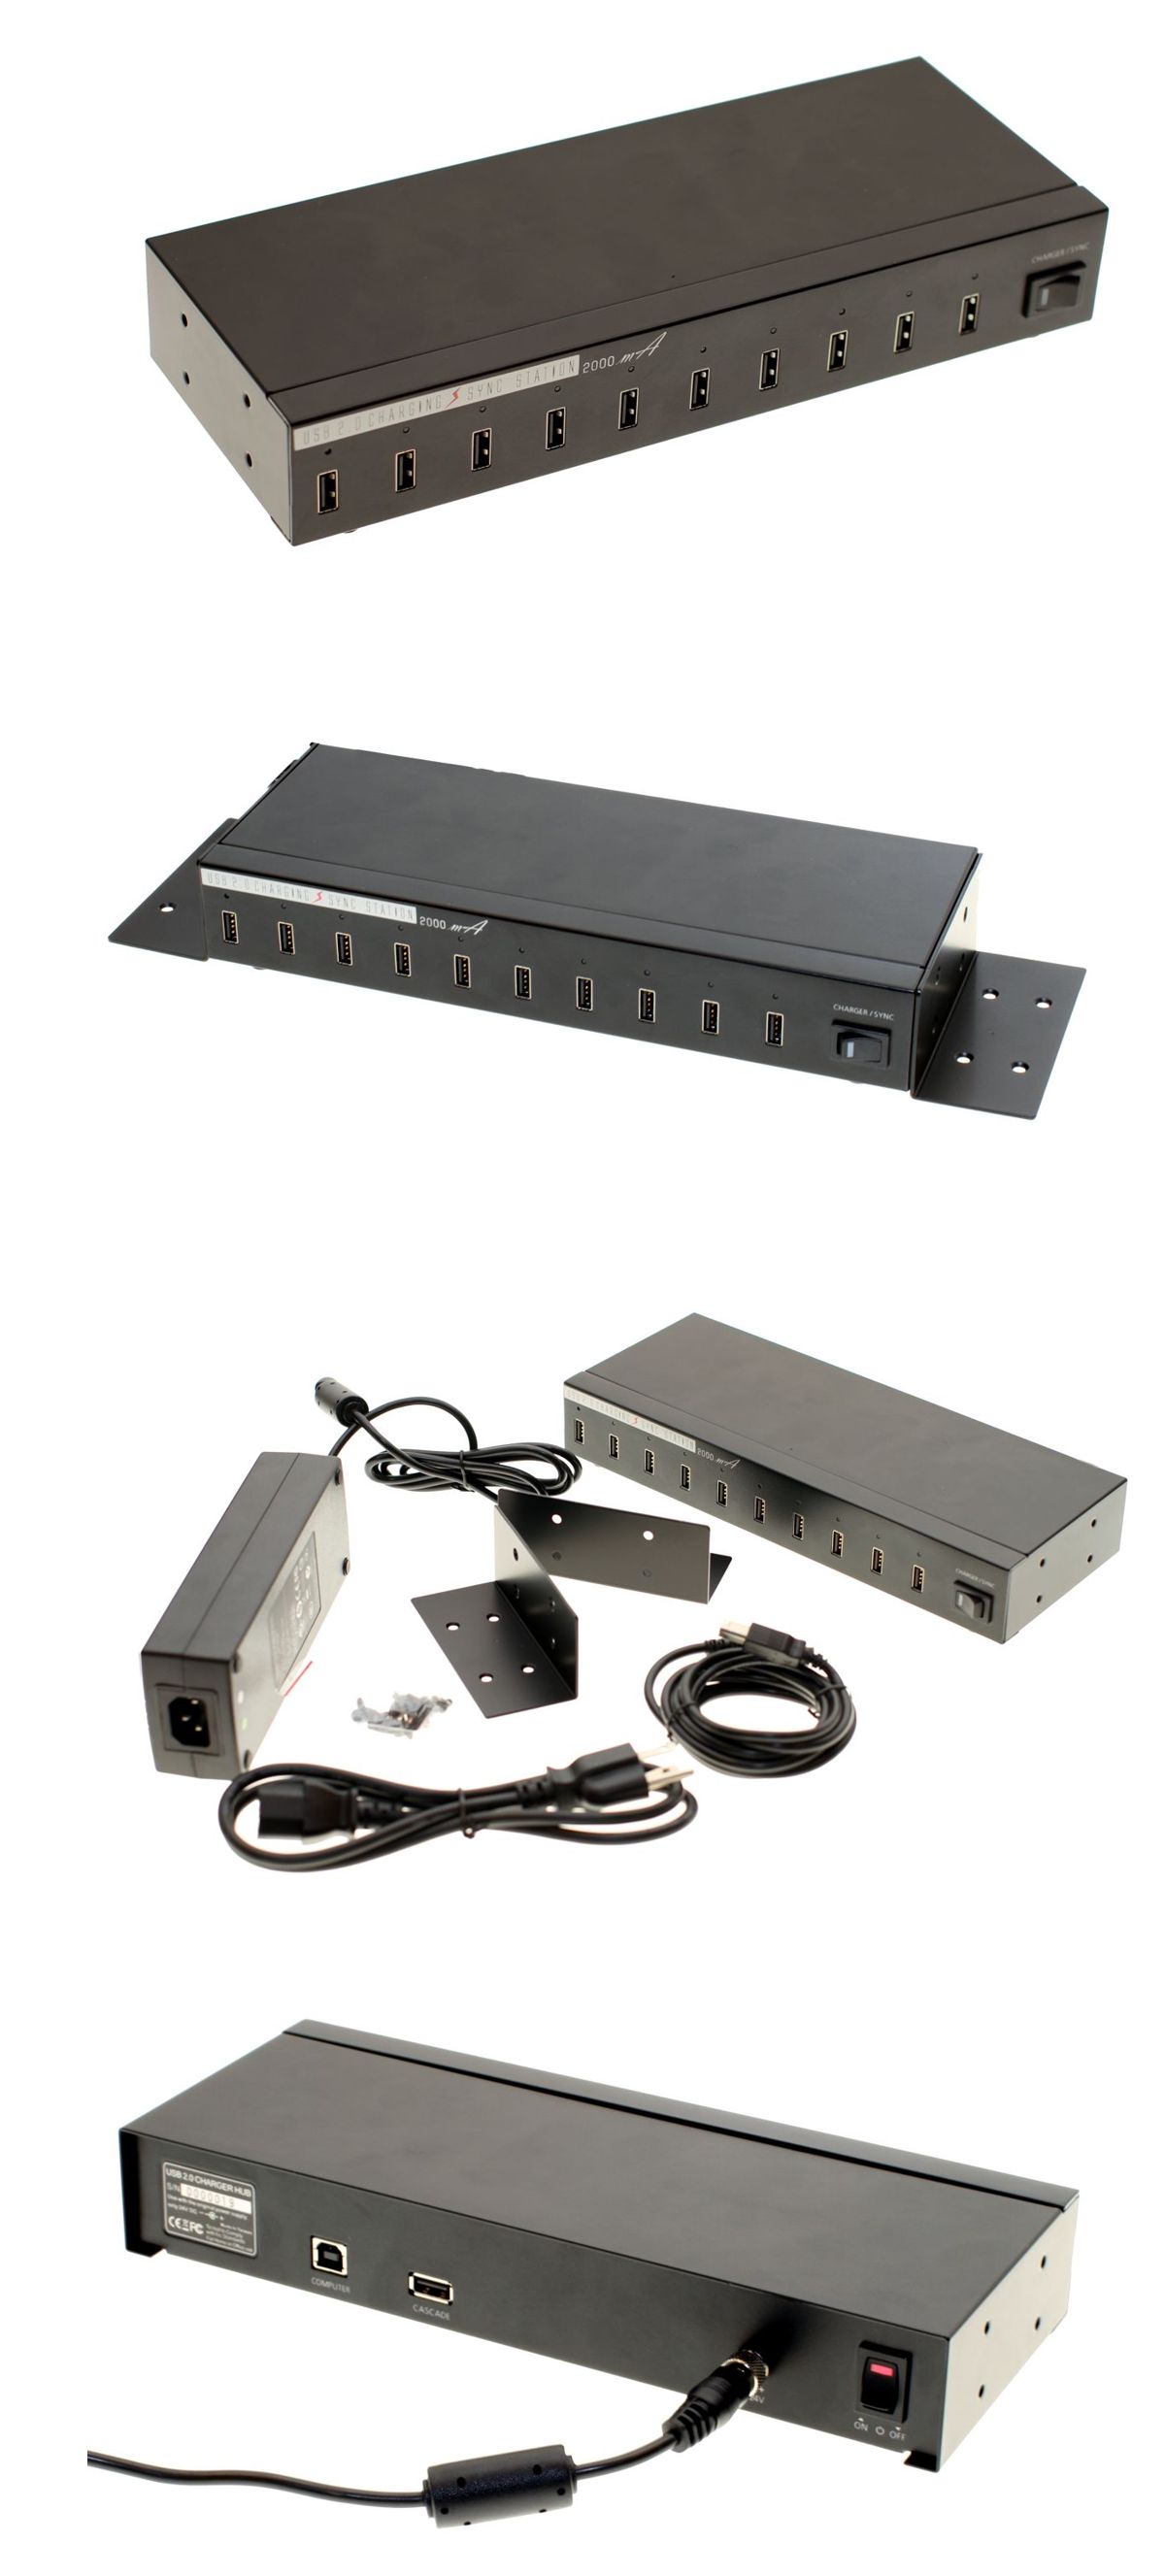 USB 2.0 Industrial Hubs - 10-port industrial-grade USB hub rack mount - by Coolgear